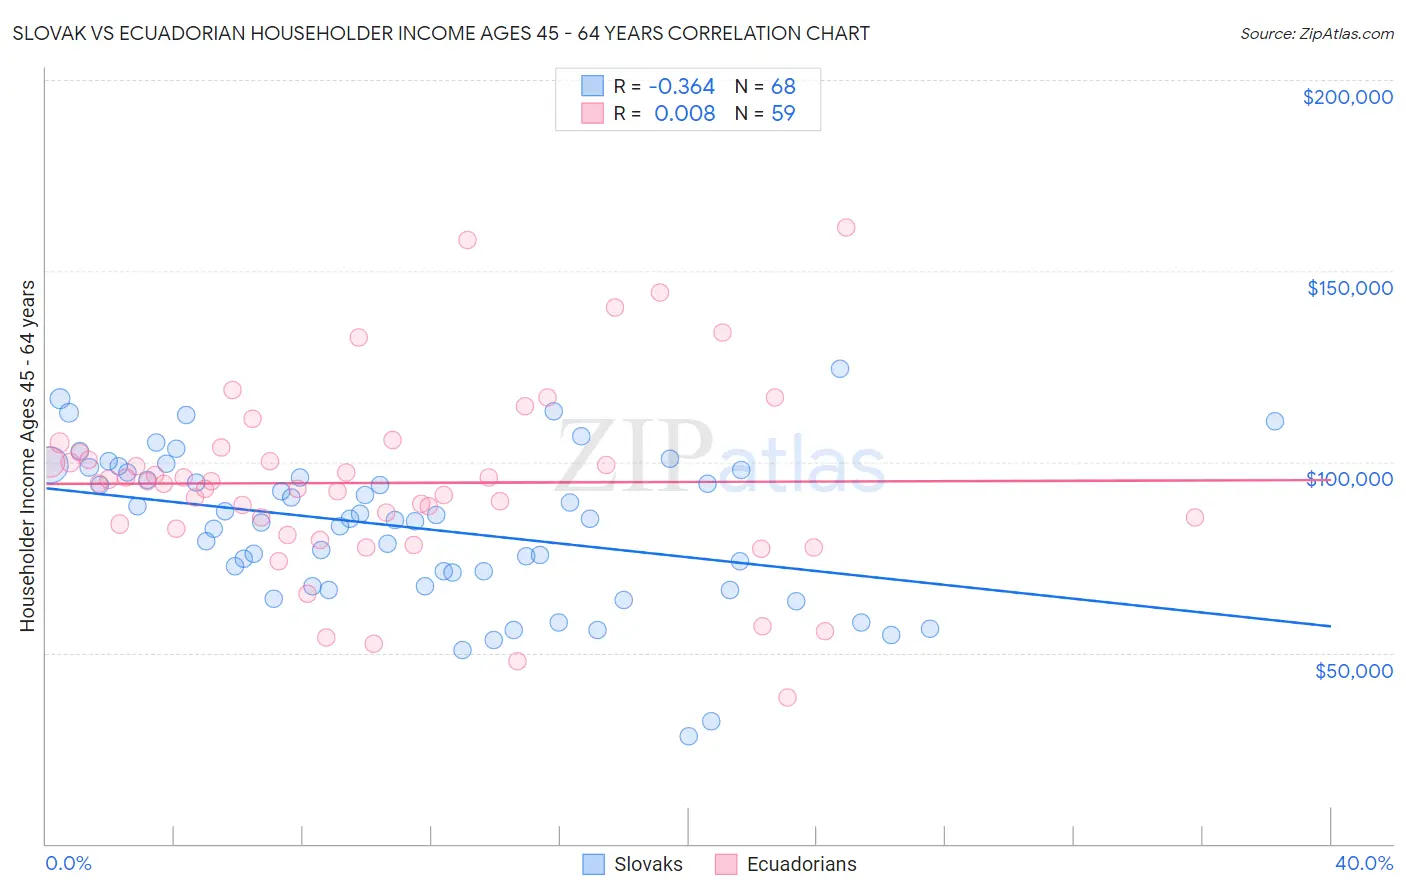 Slovak vs Ecuadorian Householder Income Ages 45 - 64 years